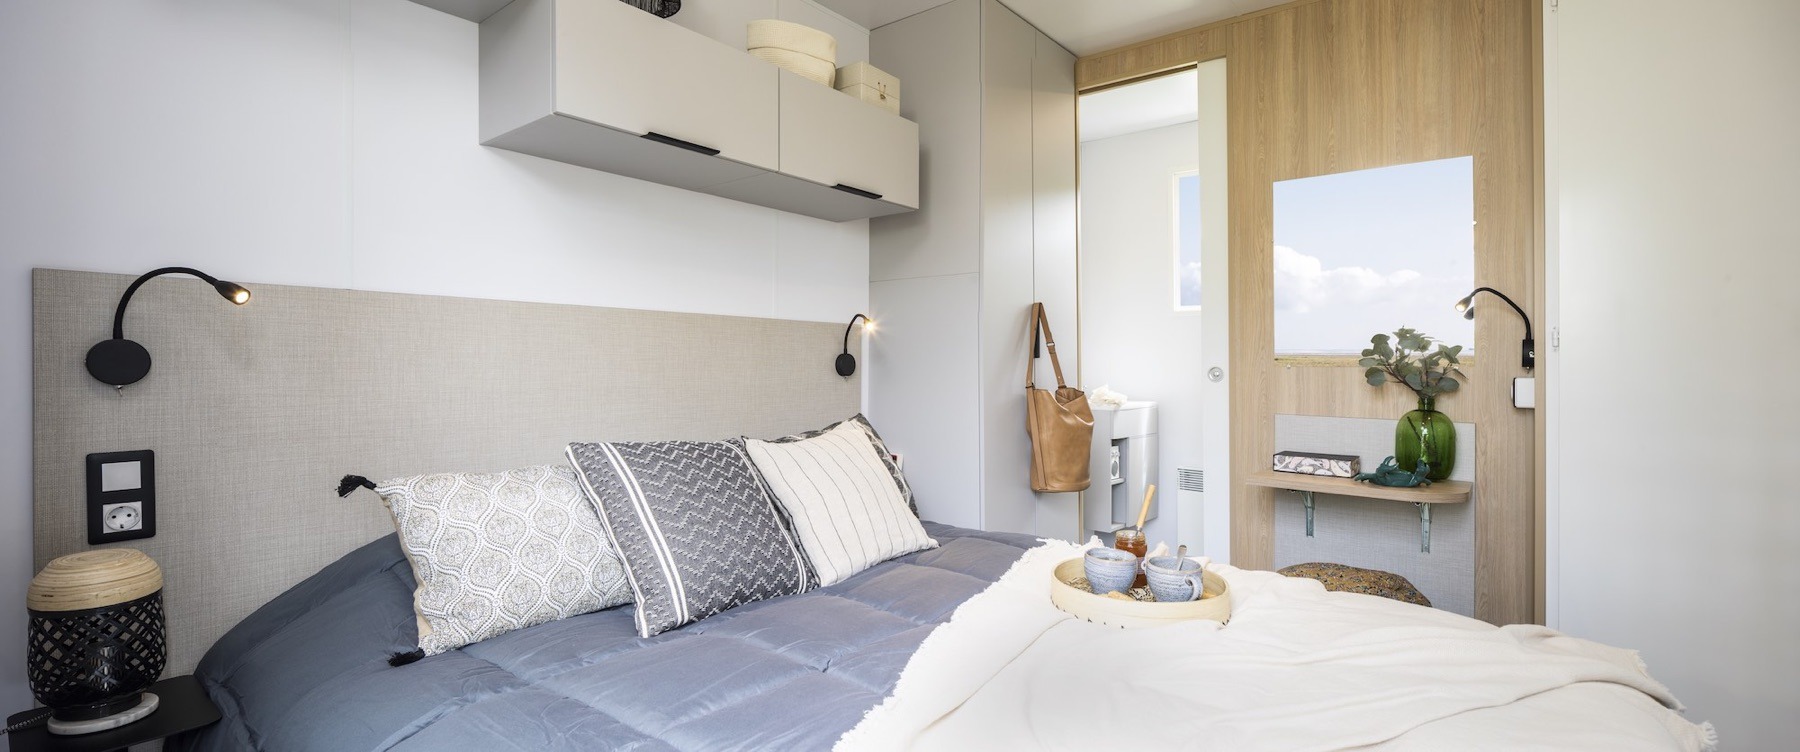 Rental-mobile-home-prestige-with-great-room-camping-saint-jean-de-monts-vendee-Les-Places-Dorees